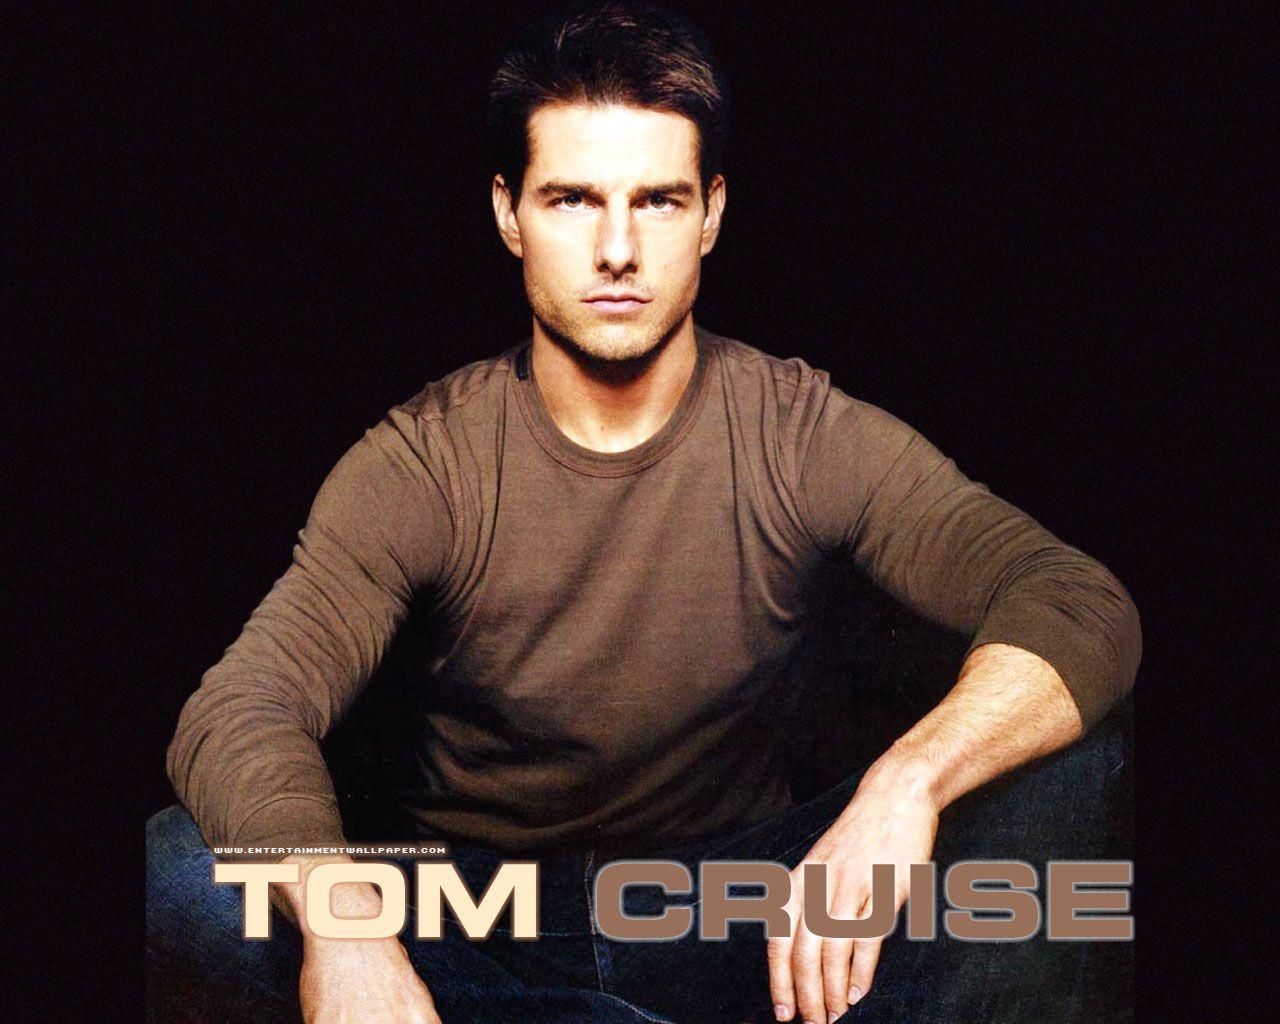 Tom Cruise Topgun Wallpaper. トムクルーズ